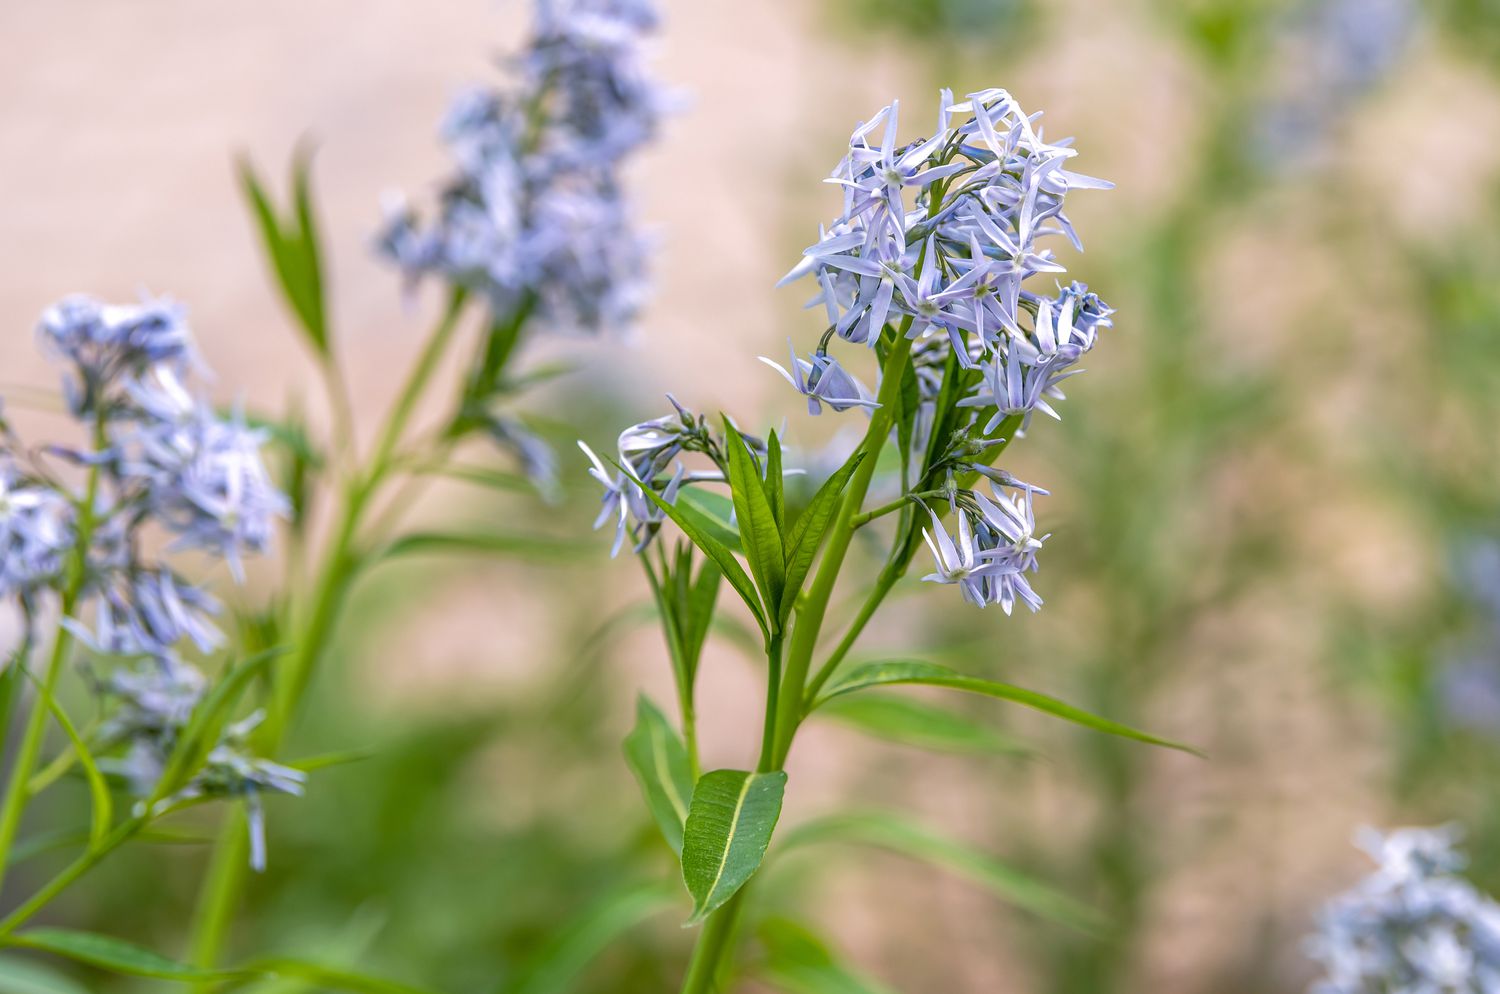 Arkansas Blausternpflanze mit hellblauen sternförmigen Blüten am Stiel